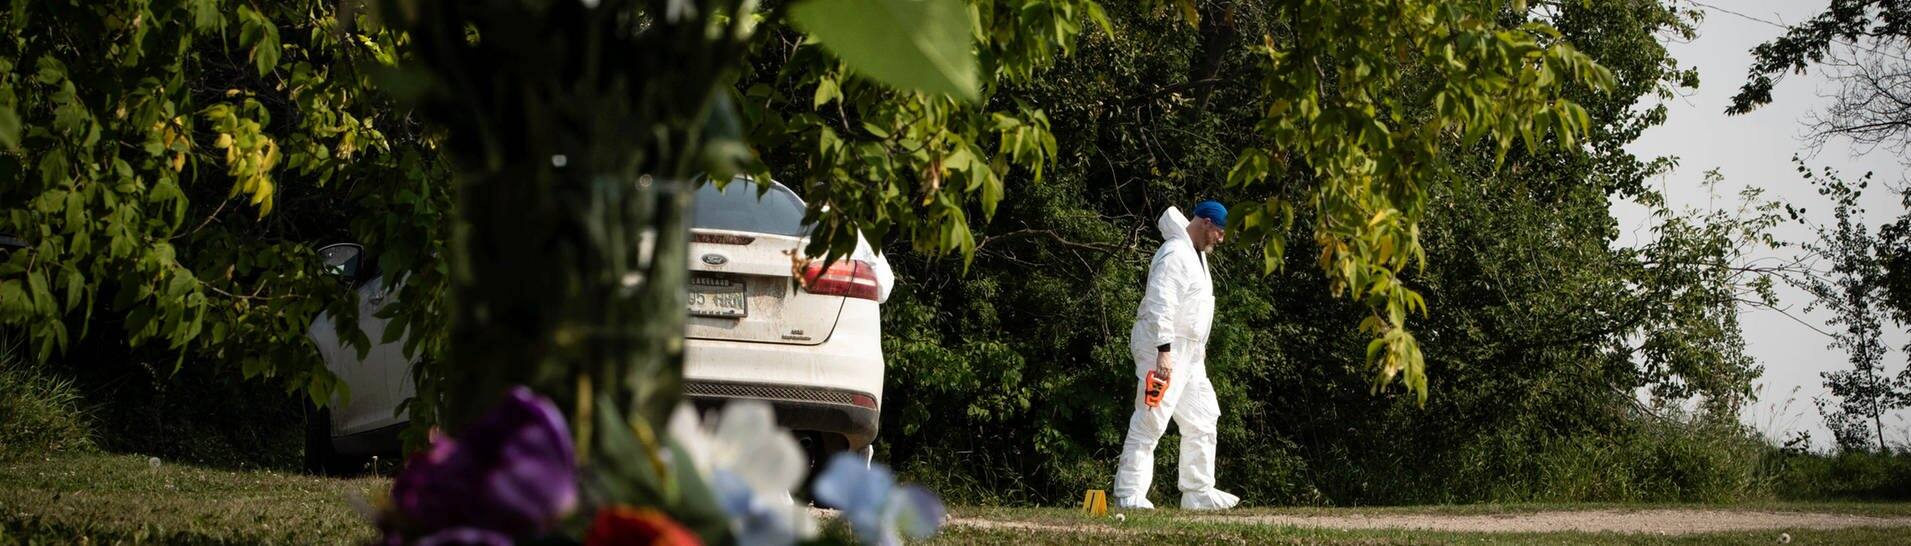 Spurensuche nach der Messerattacke in Kanada mit zehn Toten. (Foto: dpa Bildfunk, picture alliance/dpa/AP | Robert Bumsted)